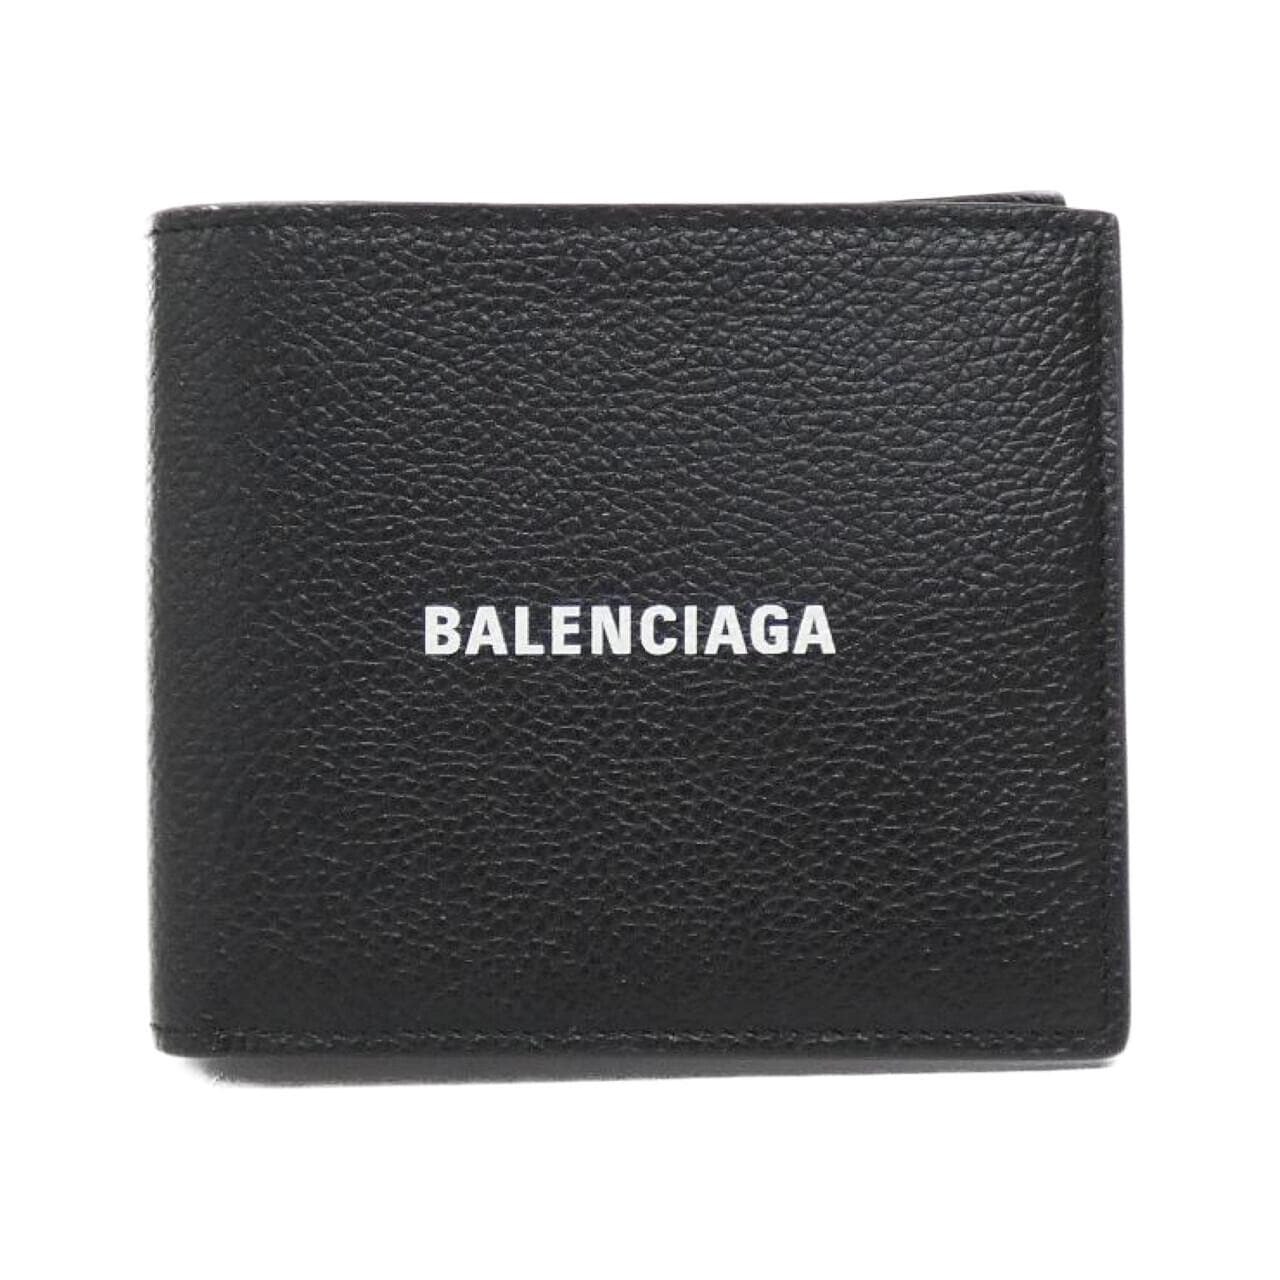 [BRAND NEW] BALENCIAGA Cash Square Fold Wallet 594549 1IZI3 Billfold